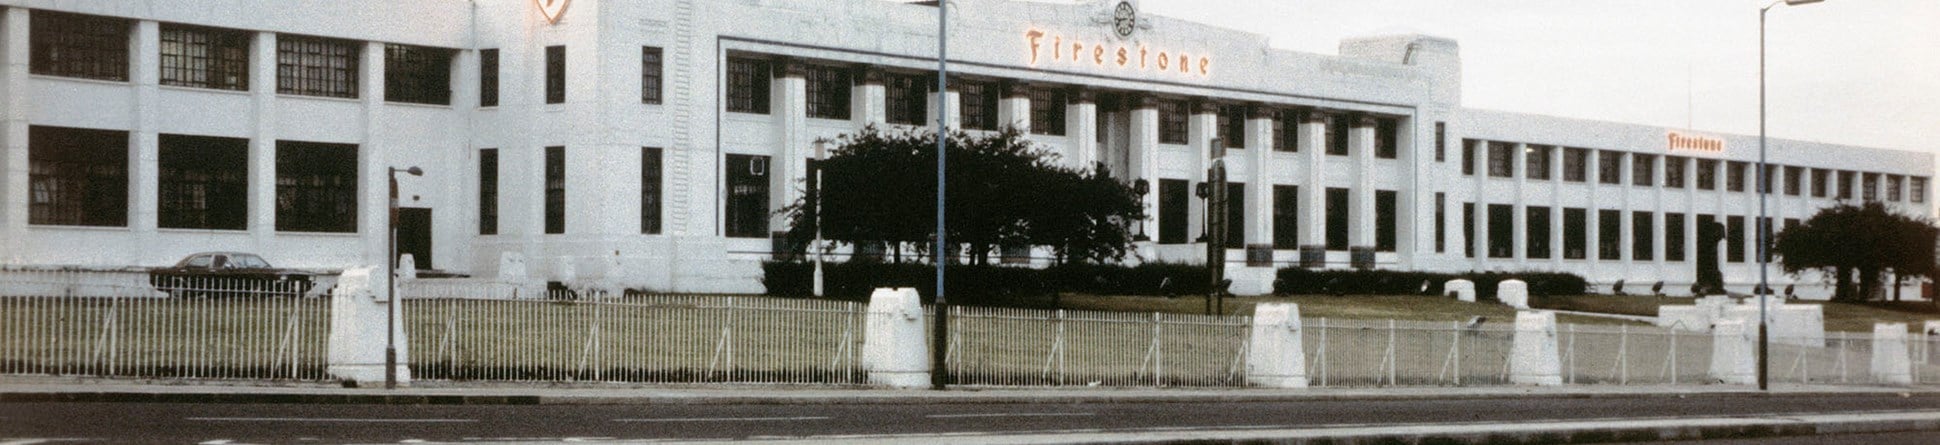 The Firestone Tyre Factory